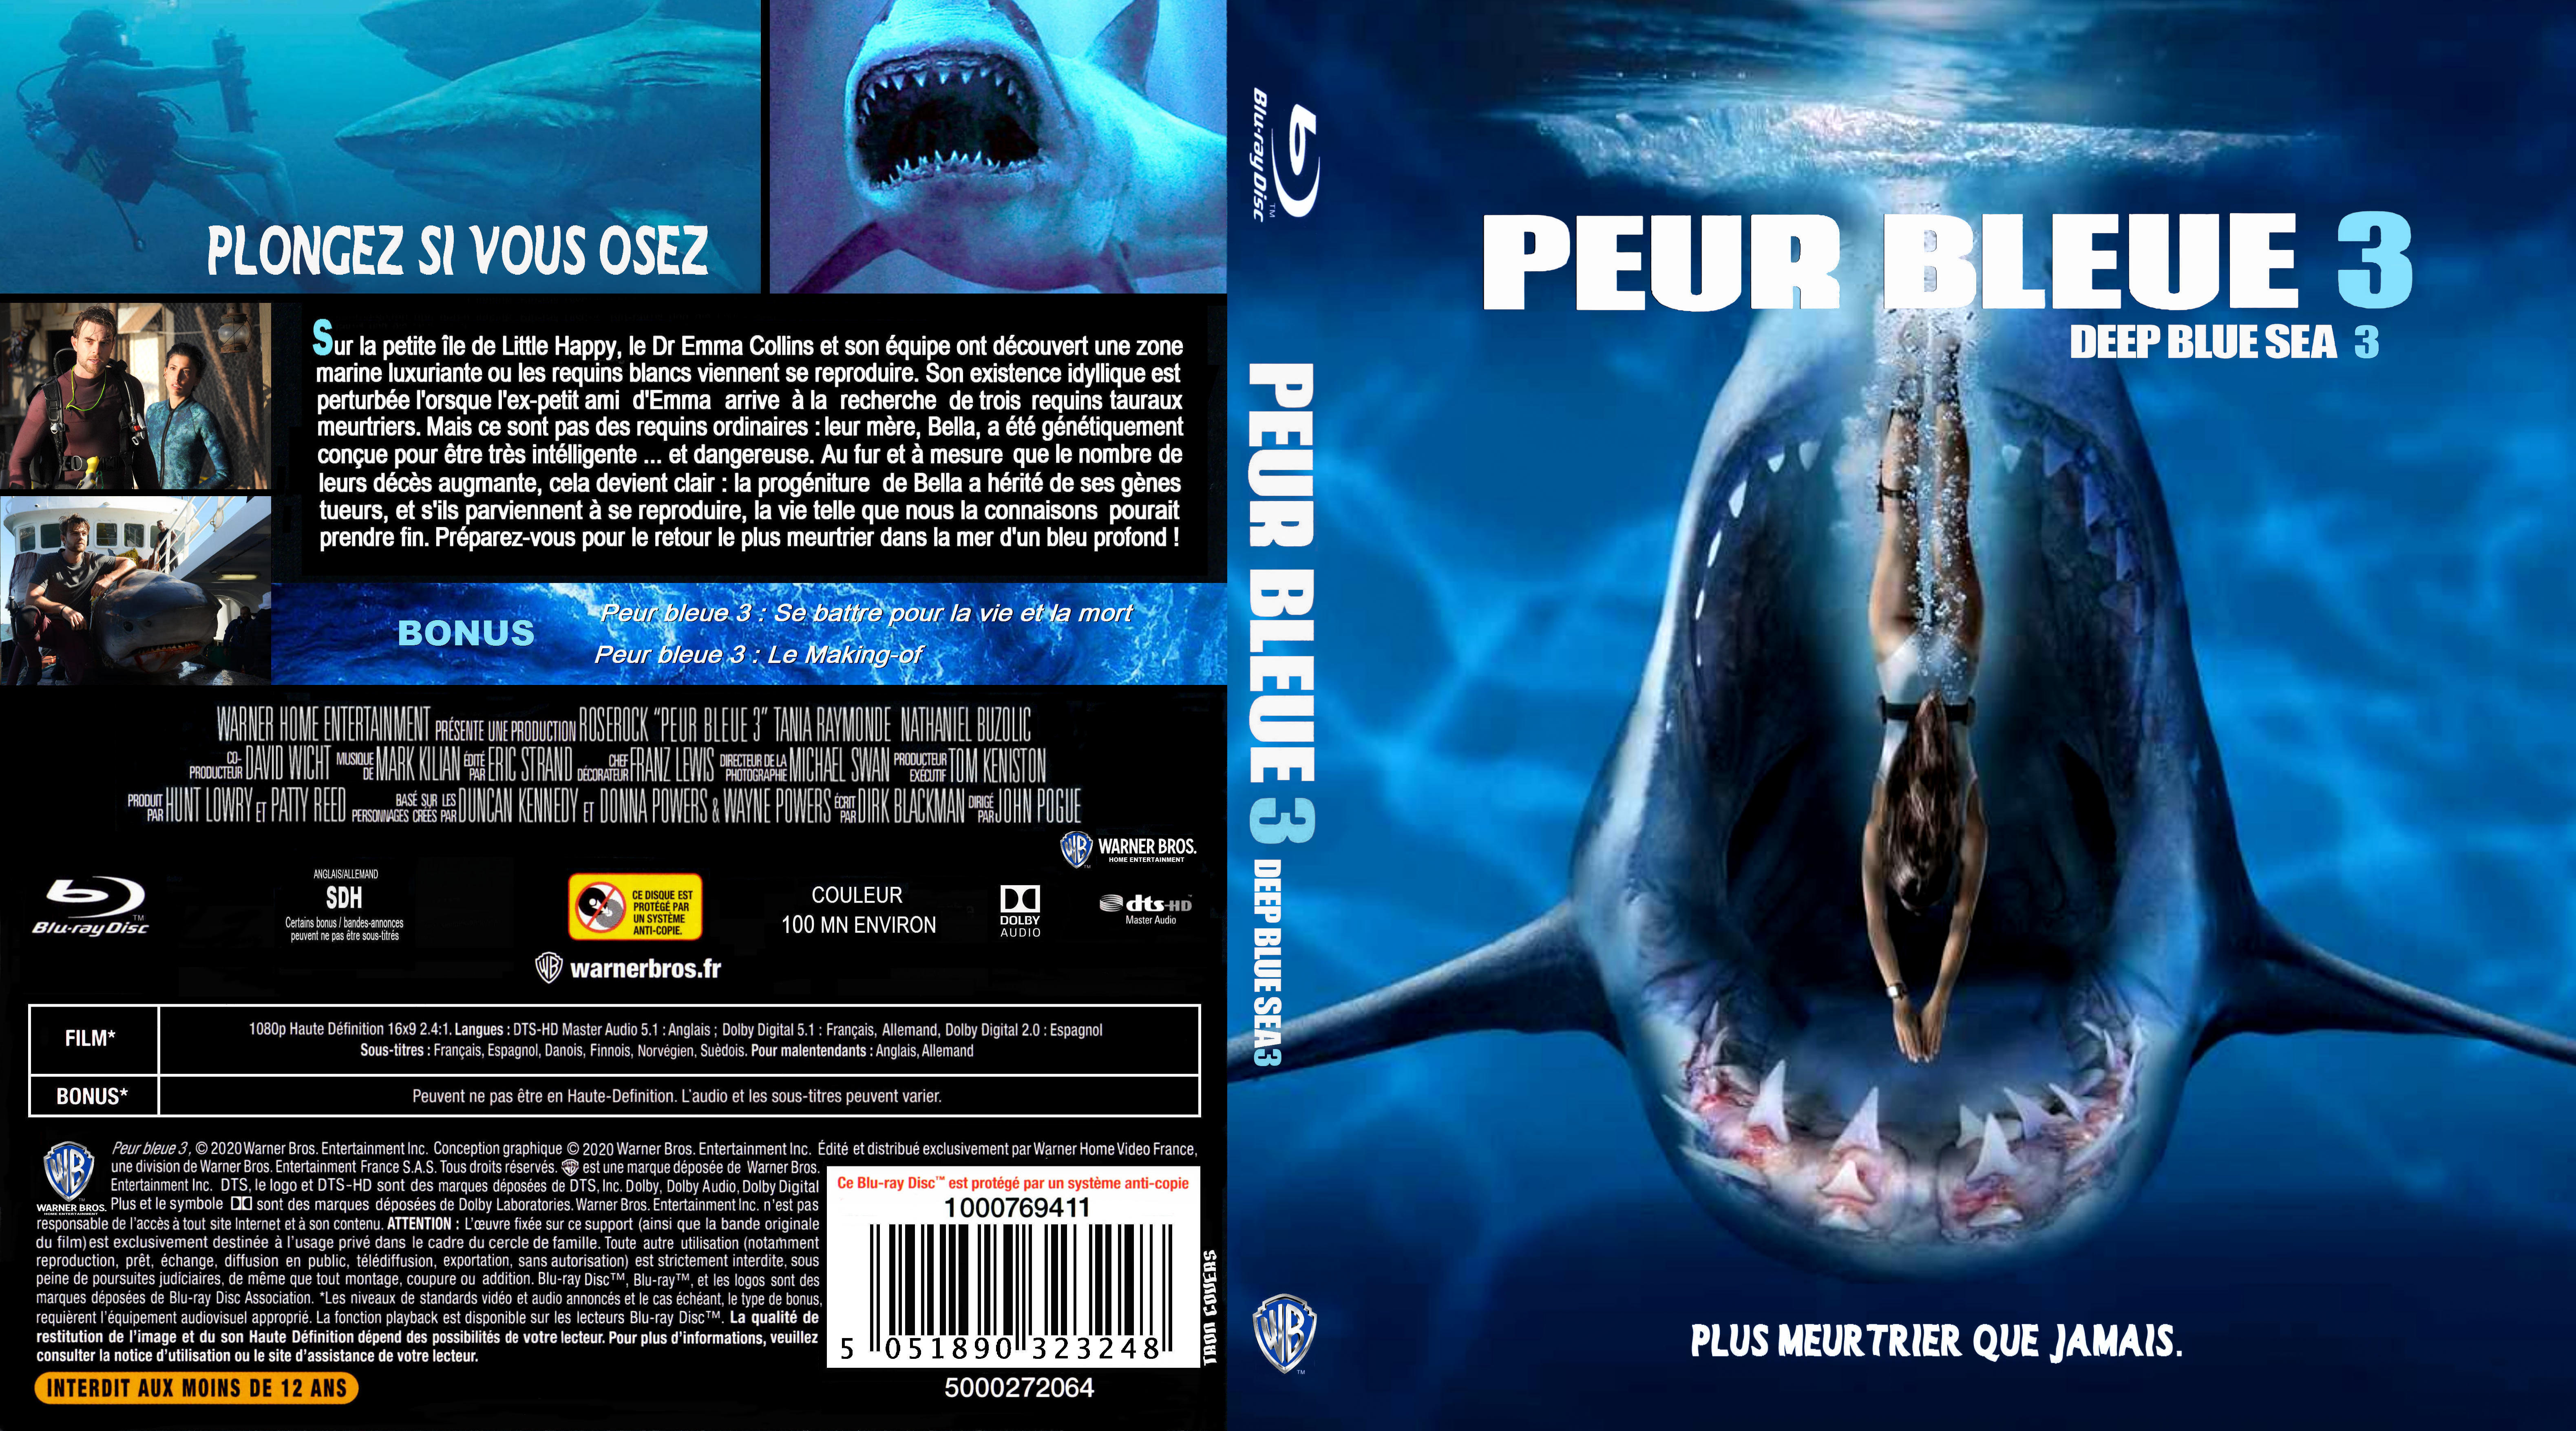 Jaquette DVD Peur bleue 3 custom (BLU-RAY)